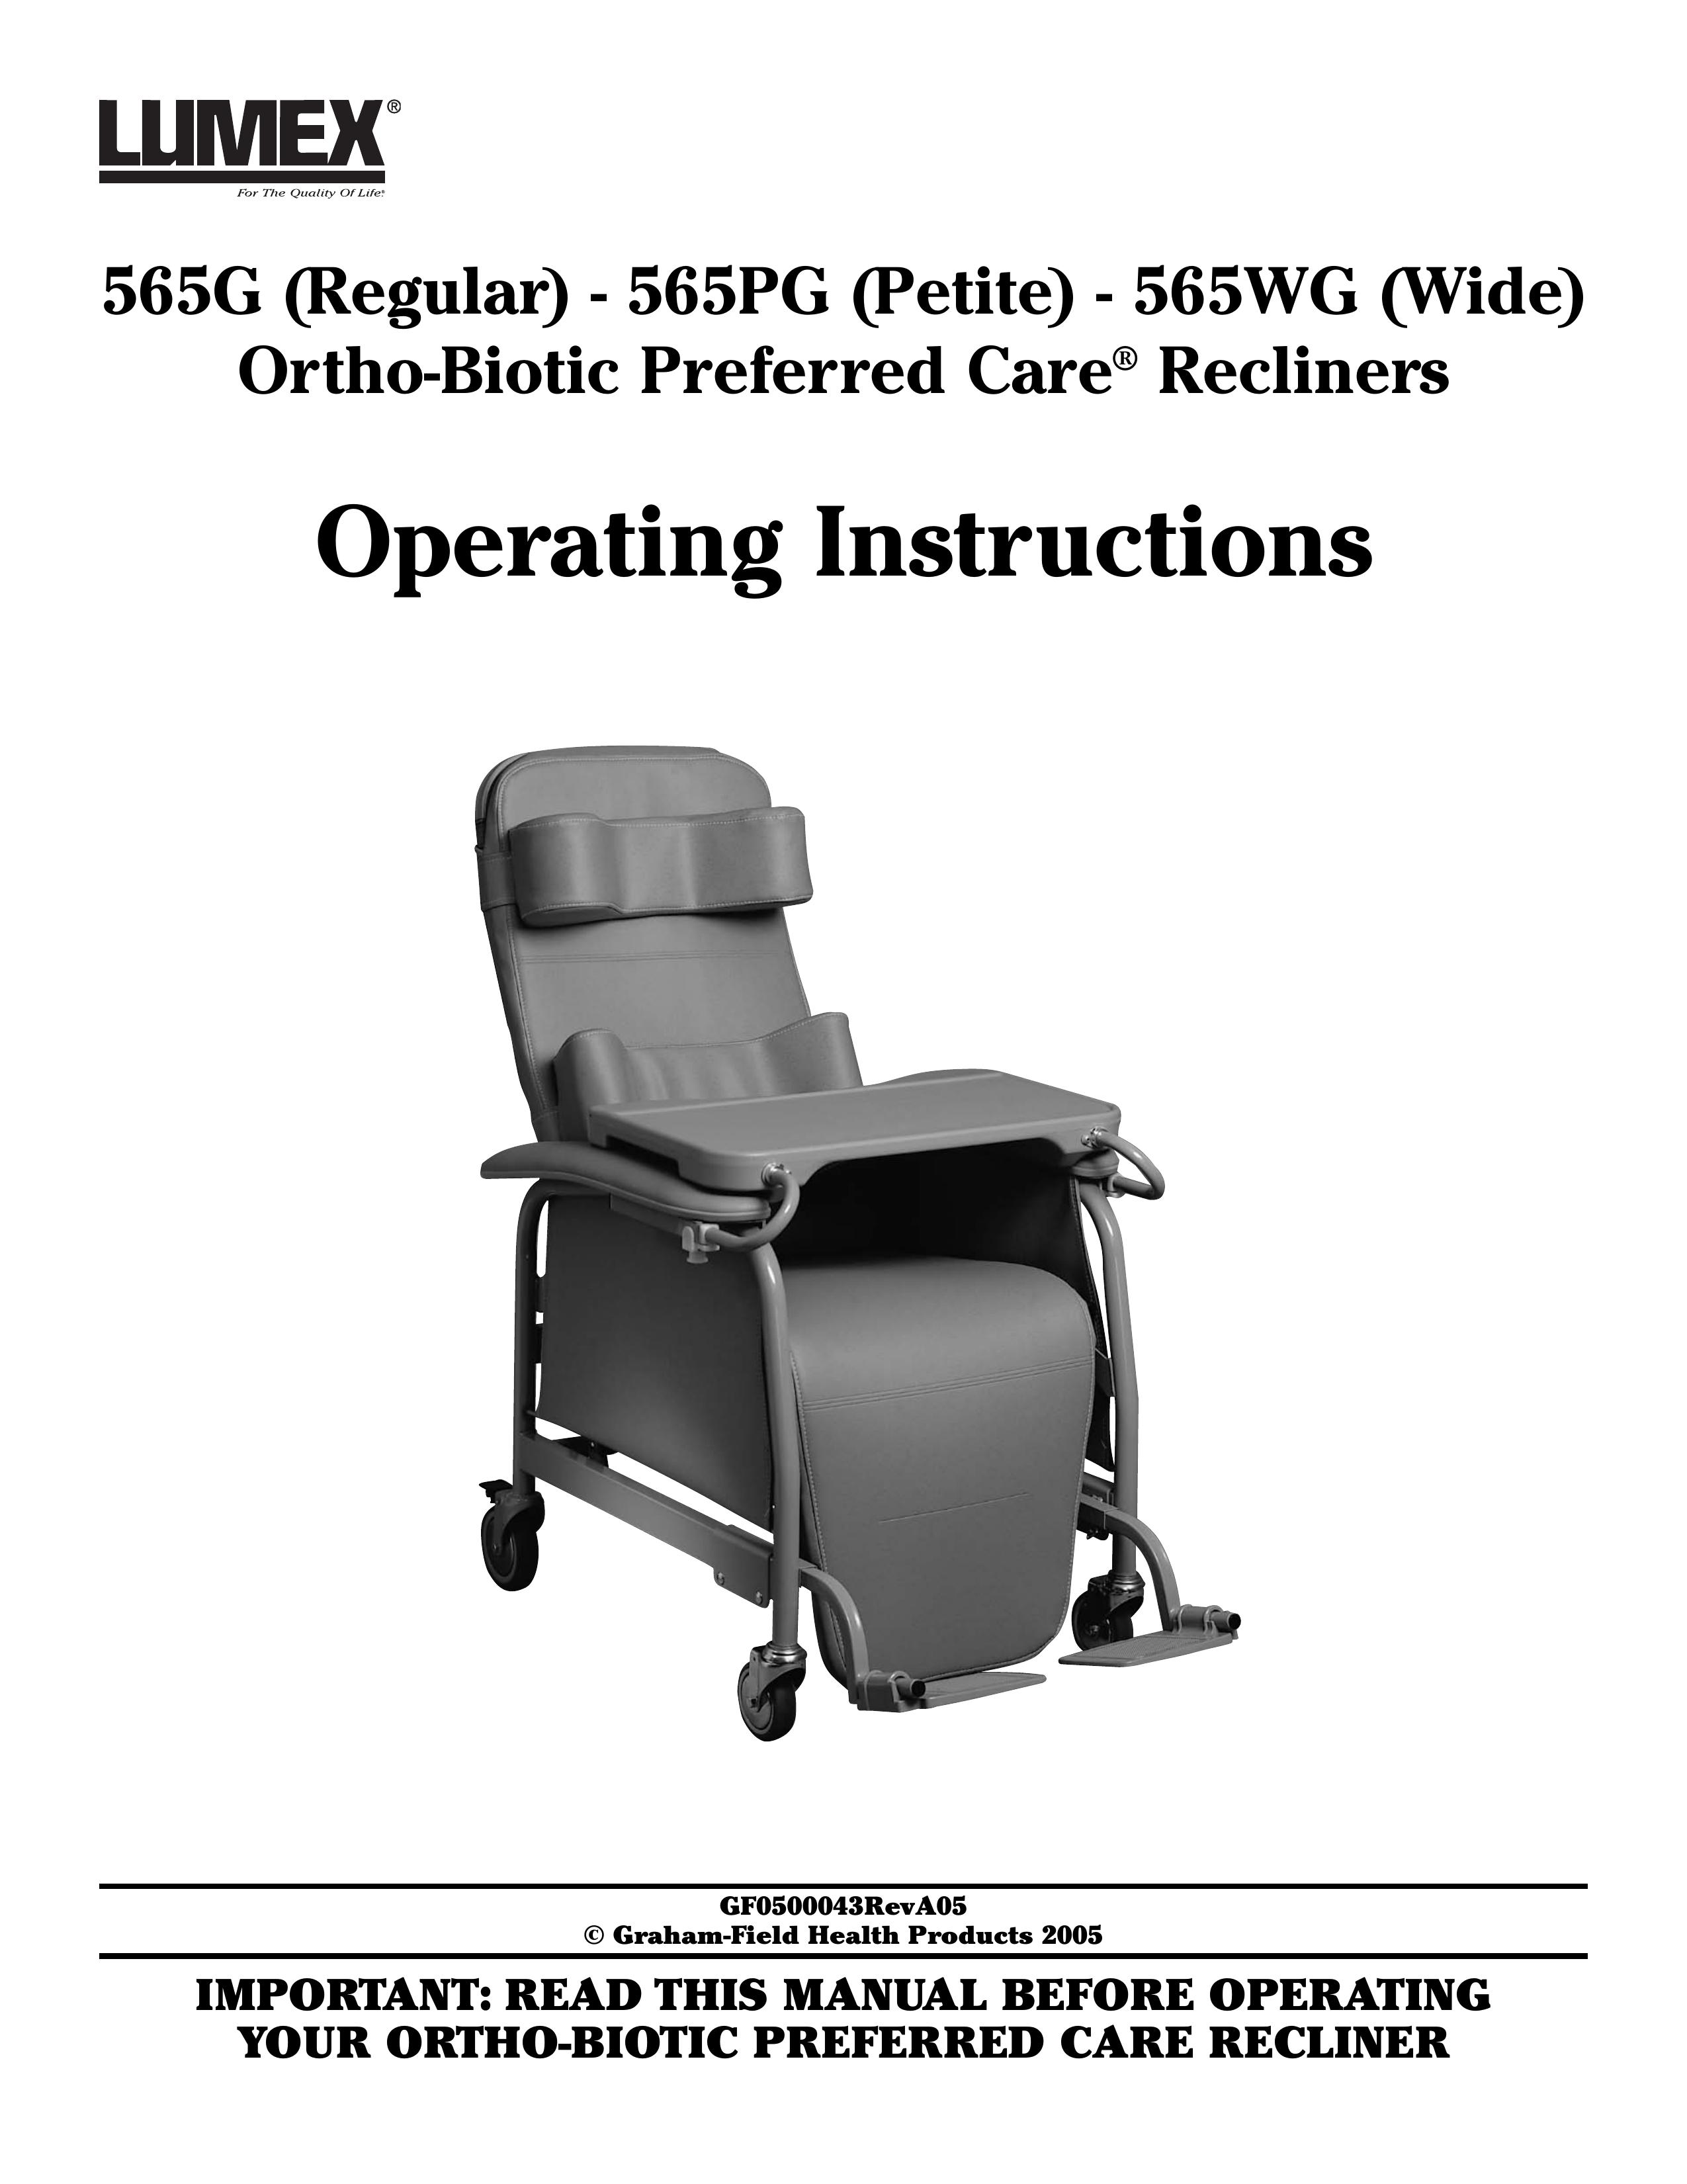 Graham Field 565WG Wheelchair User Manual